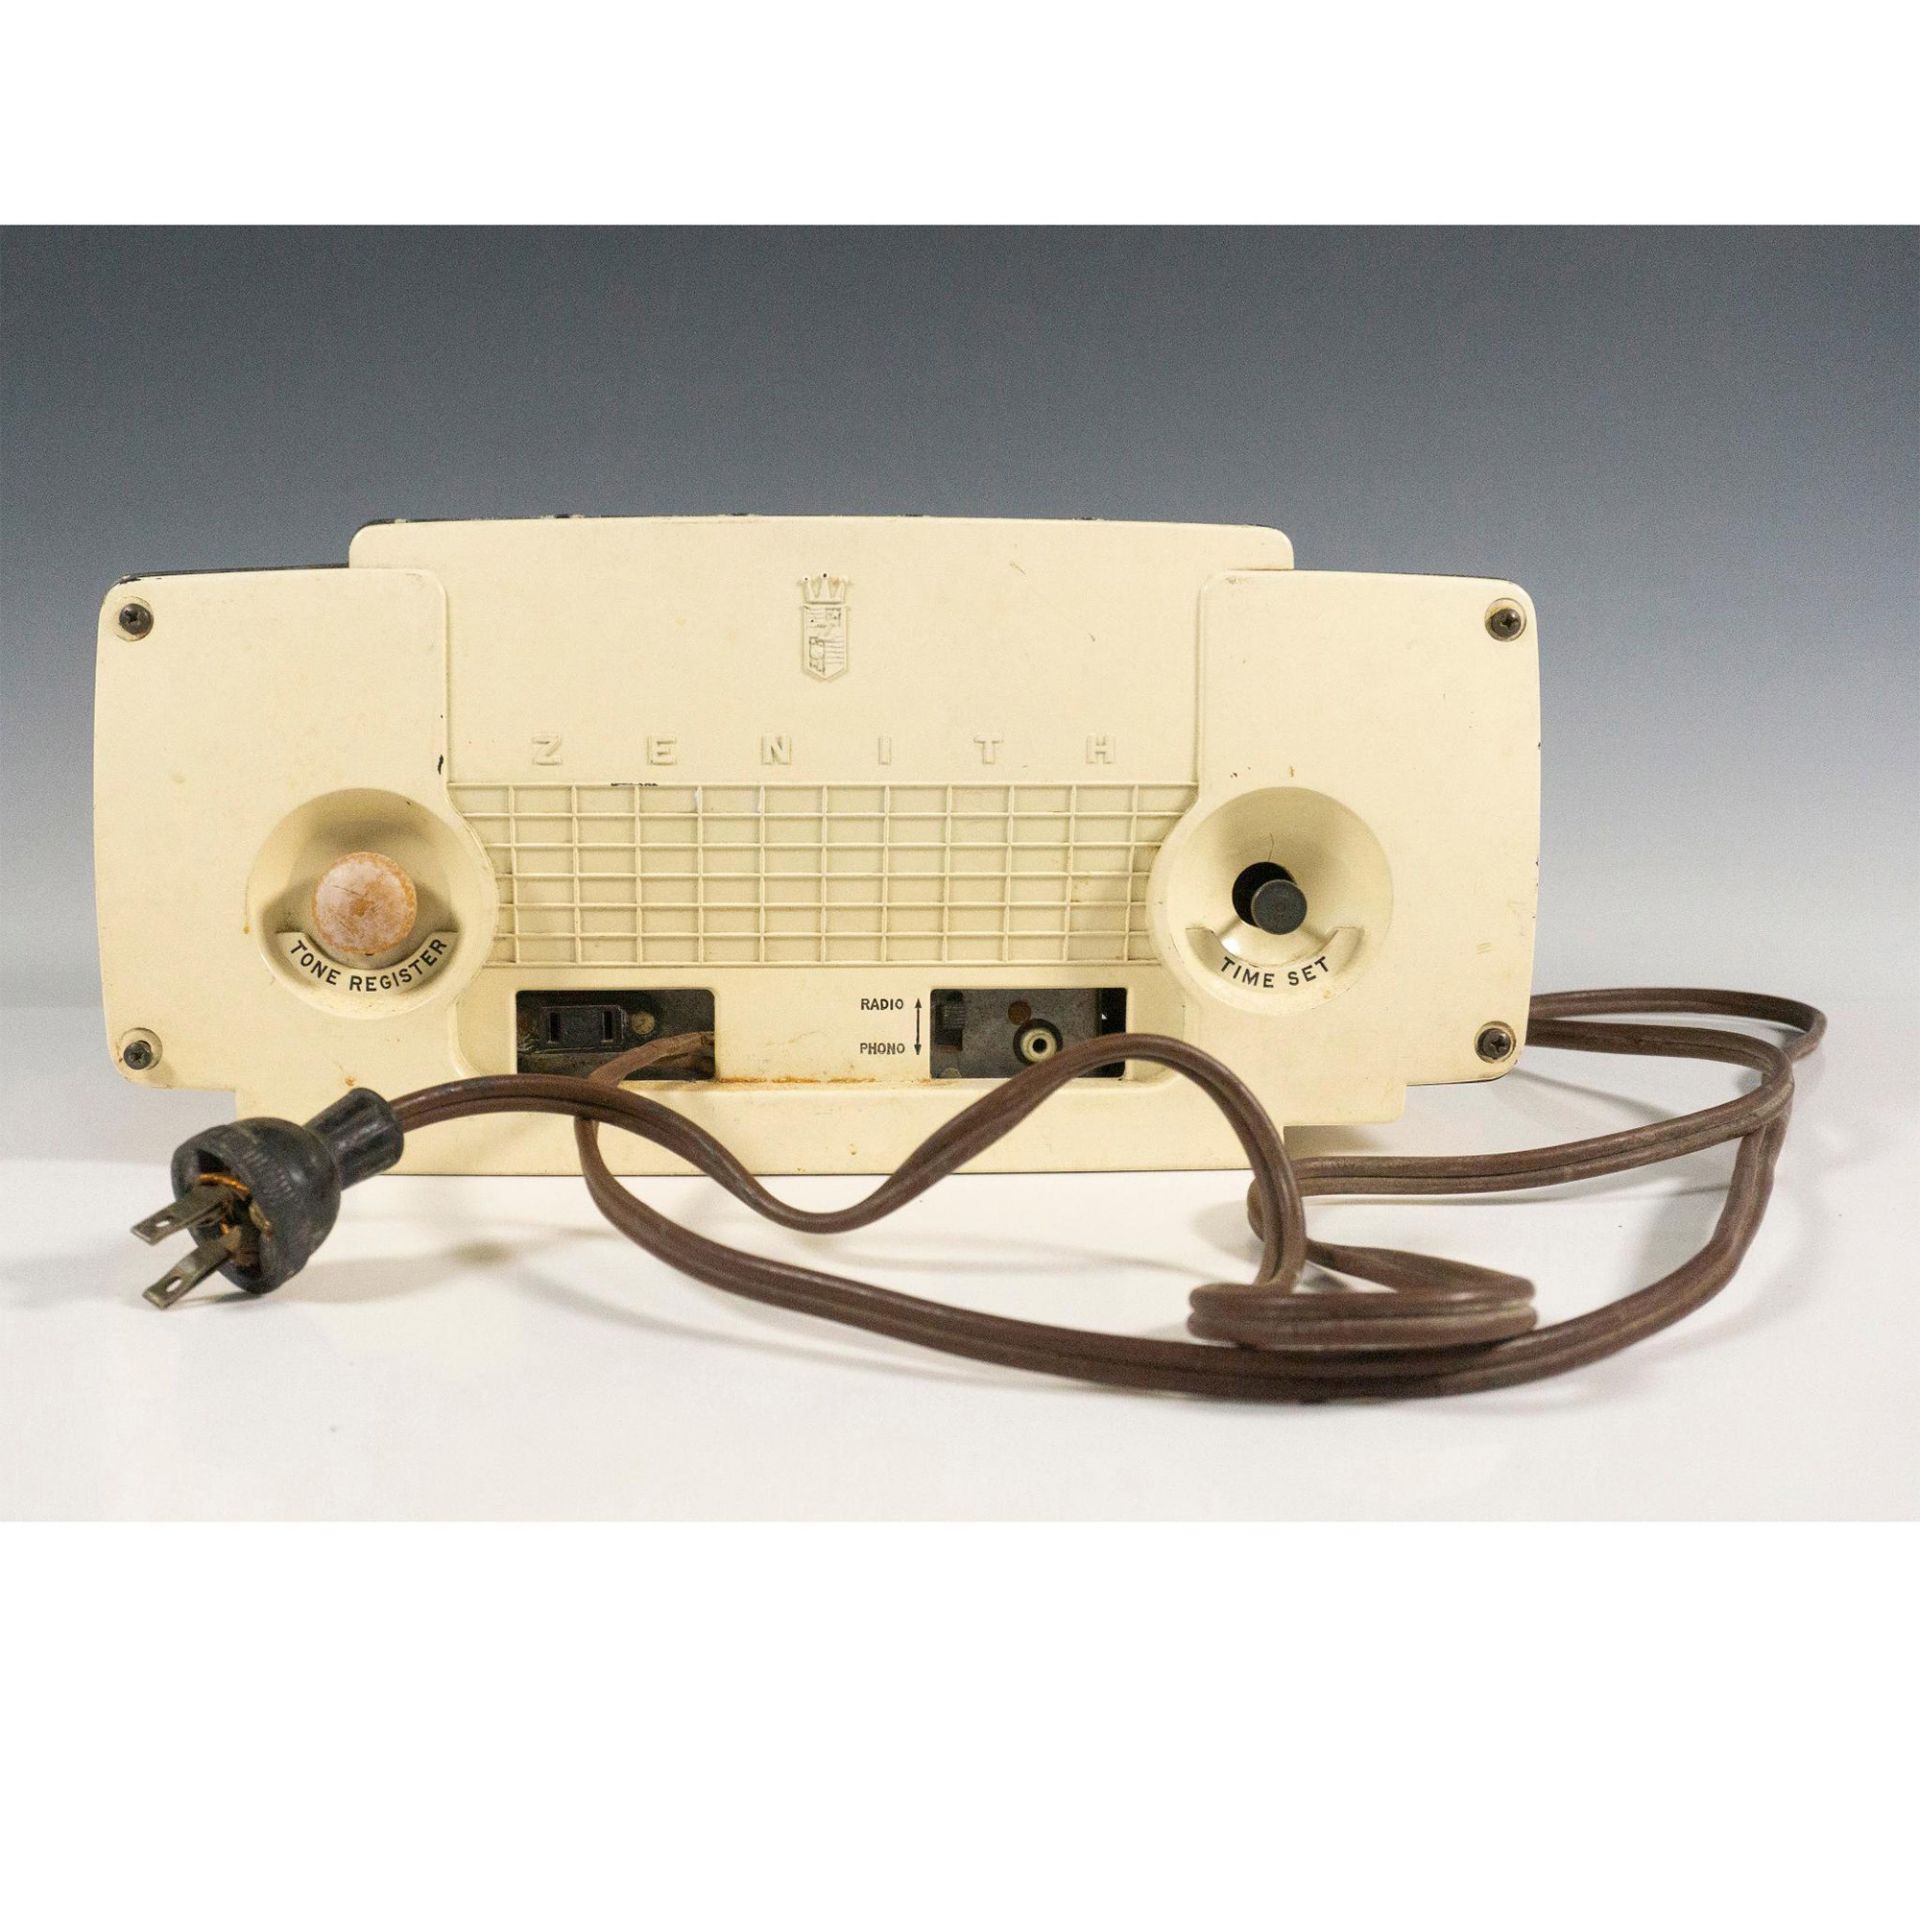 Vintage Zenith Model K622 Vacuum Tube Radio Alarm Clock - Image 3 of 4